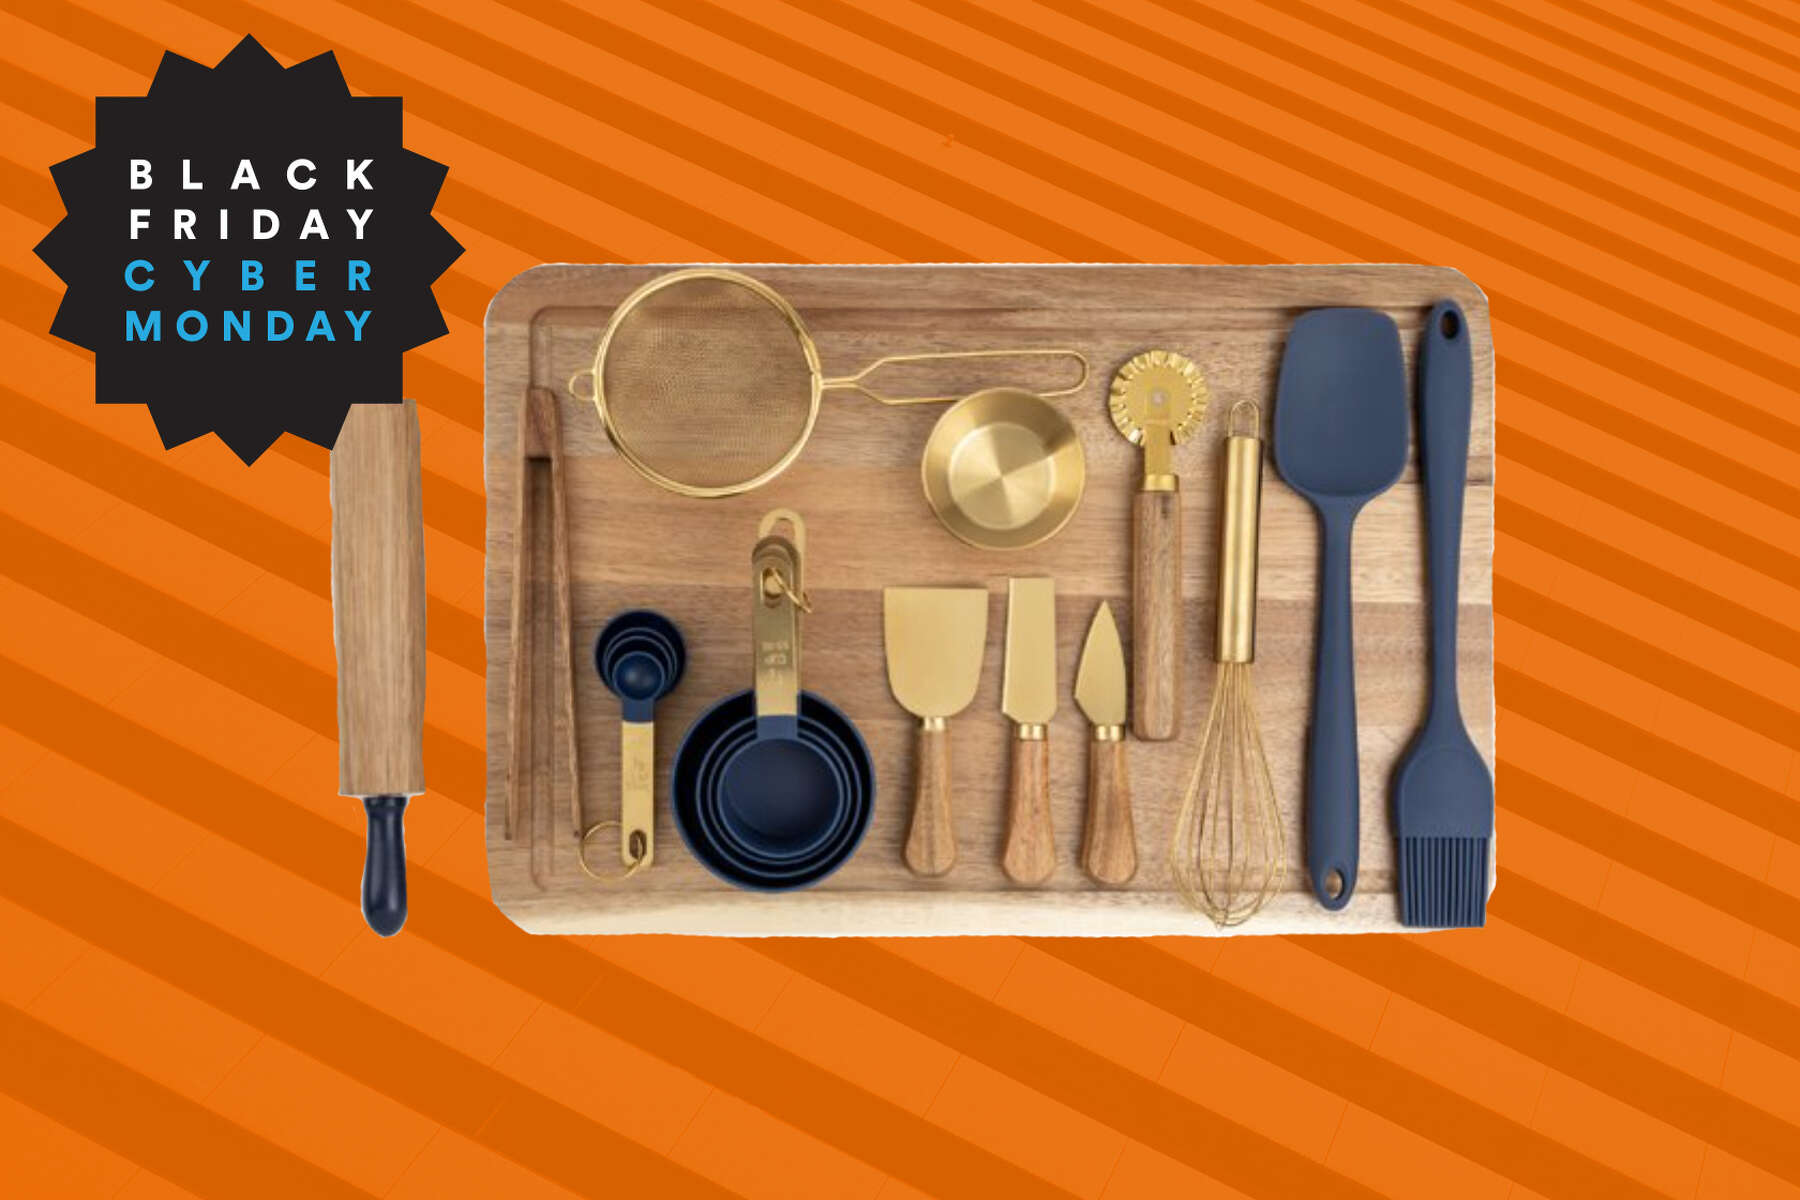 Everyday Kitchen Tool Set (15 pc) & 2-Piece Cutting Board Set Bundle